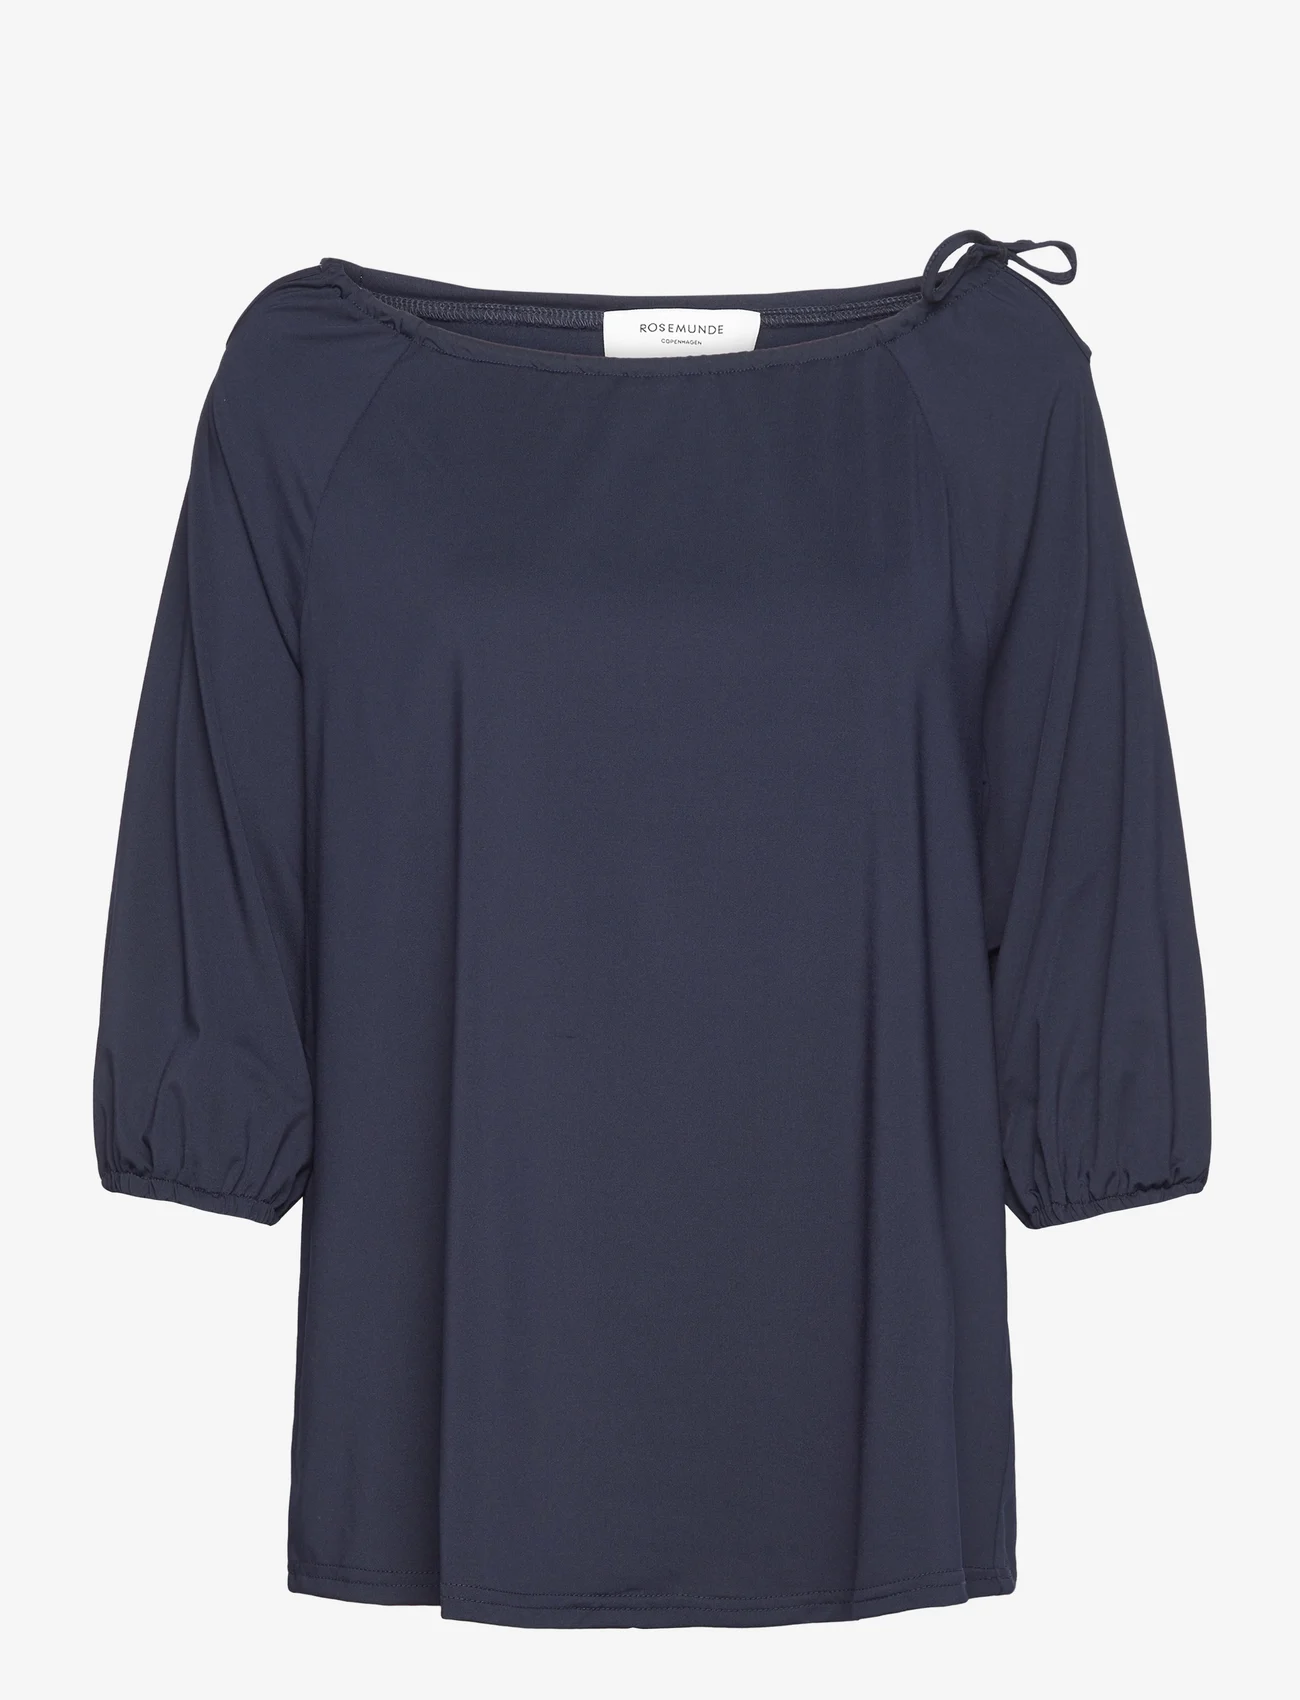 Rosemunde - T-shirt - blouses met lange mouwen - dark blue - 0